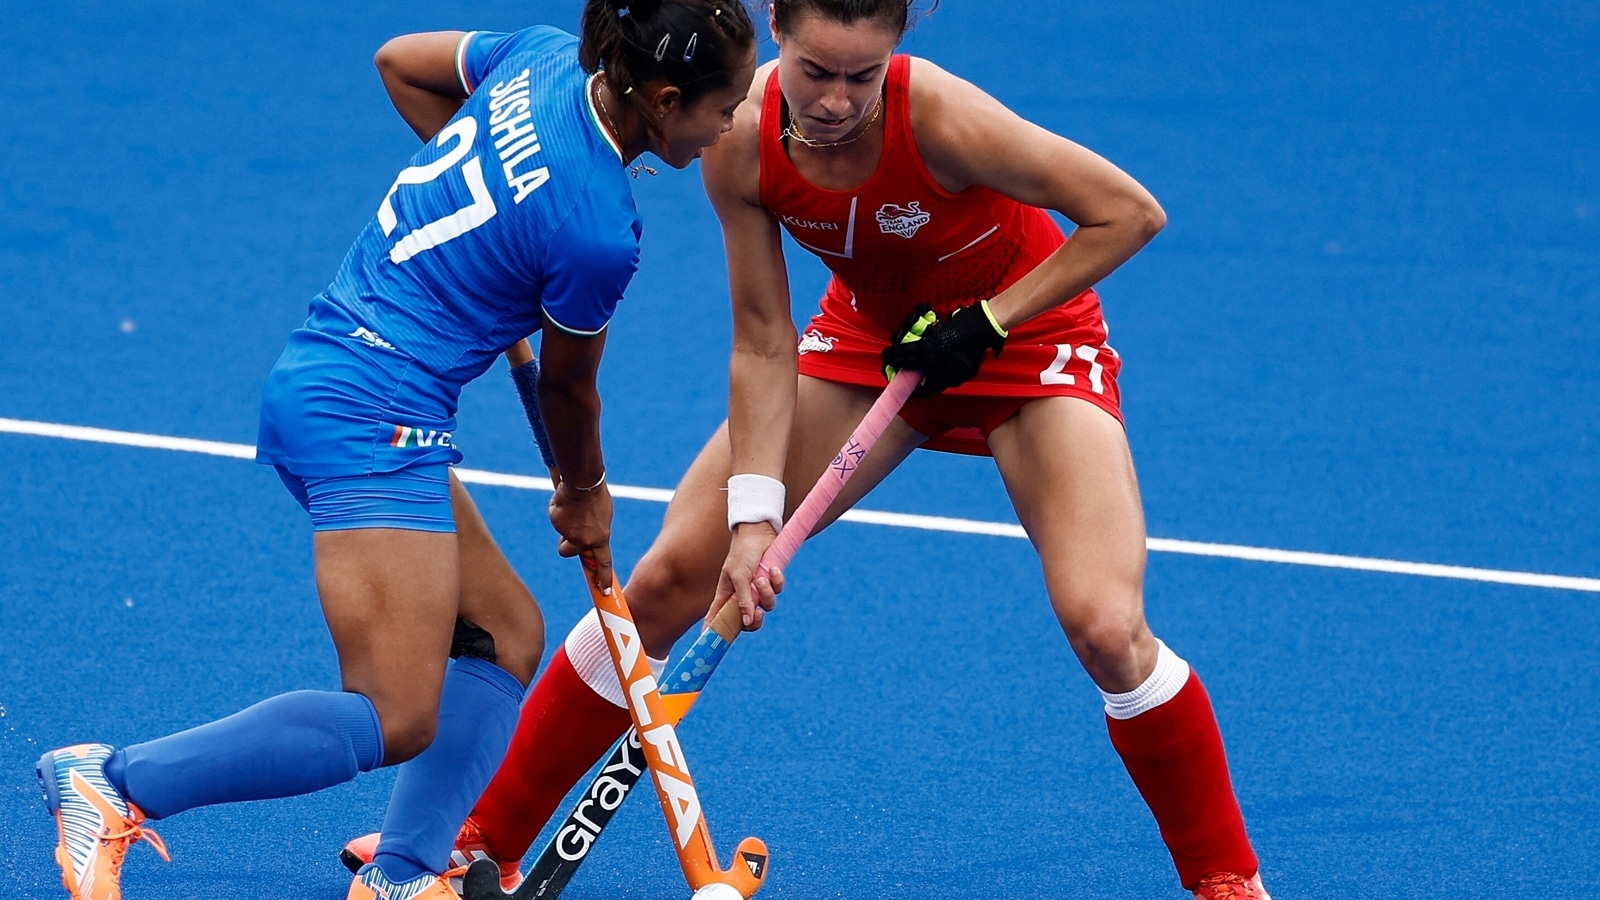 India vs England Highlights, Women's Hockey, Commonwealth Games 2022